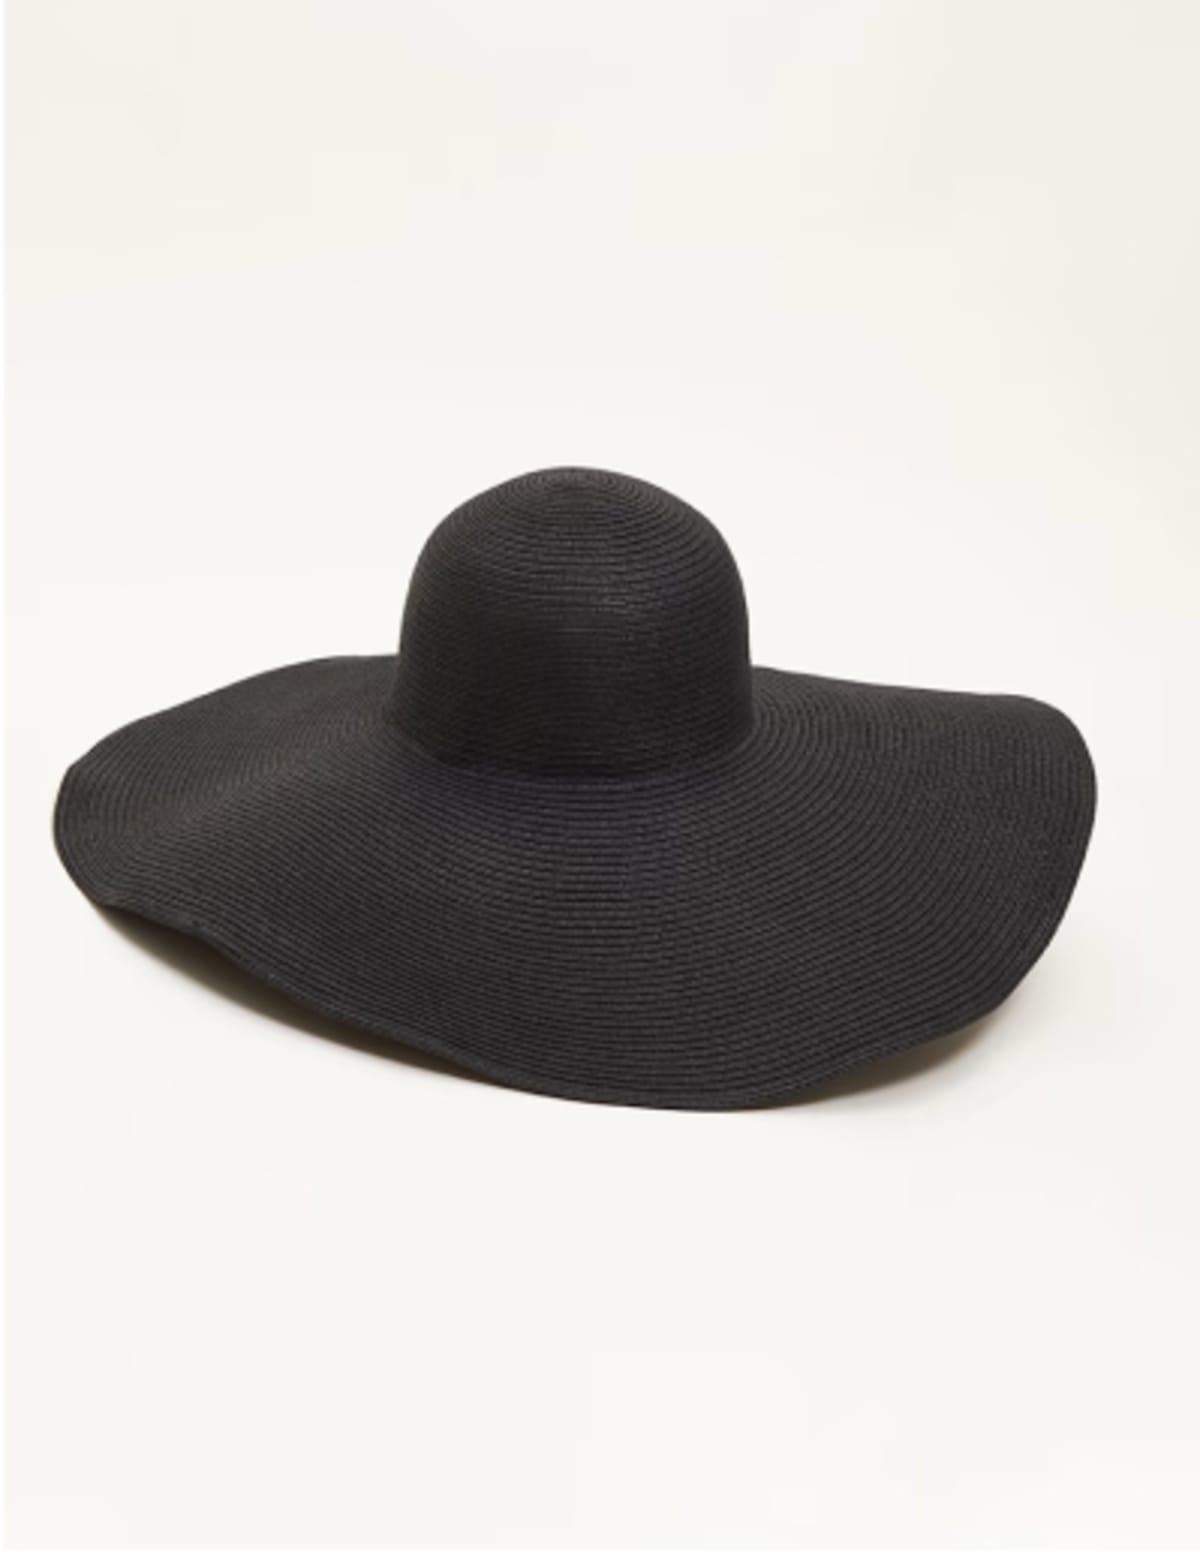 Phase Eight black straw hat